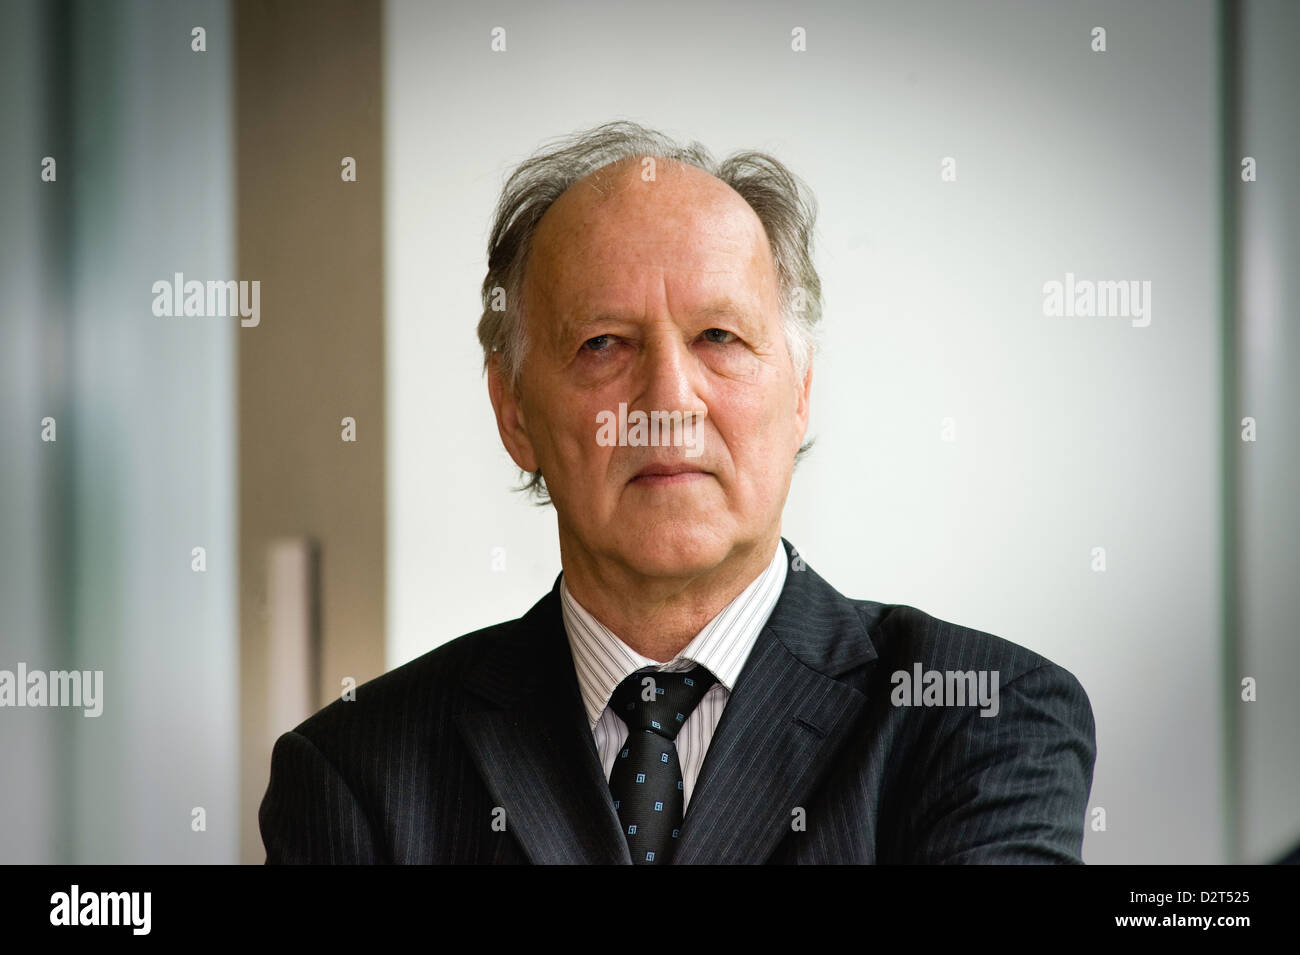 Berlin, Germany, the film director Werner Herzog in portrait Stock ...